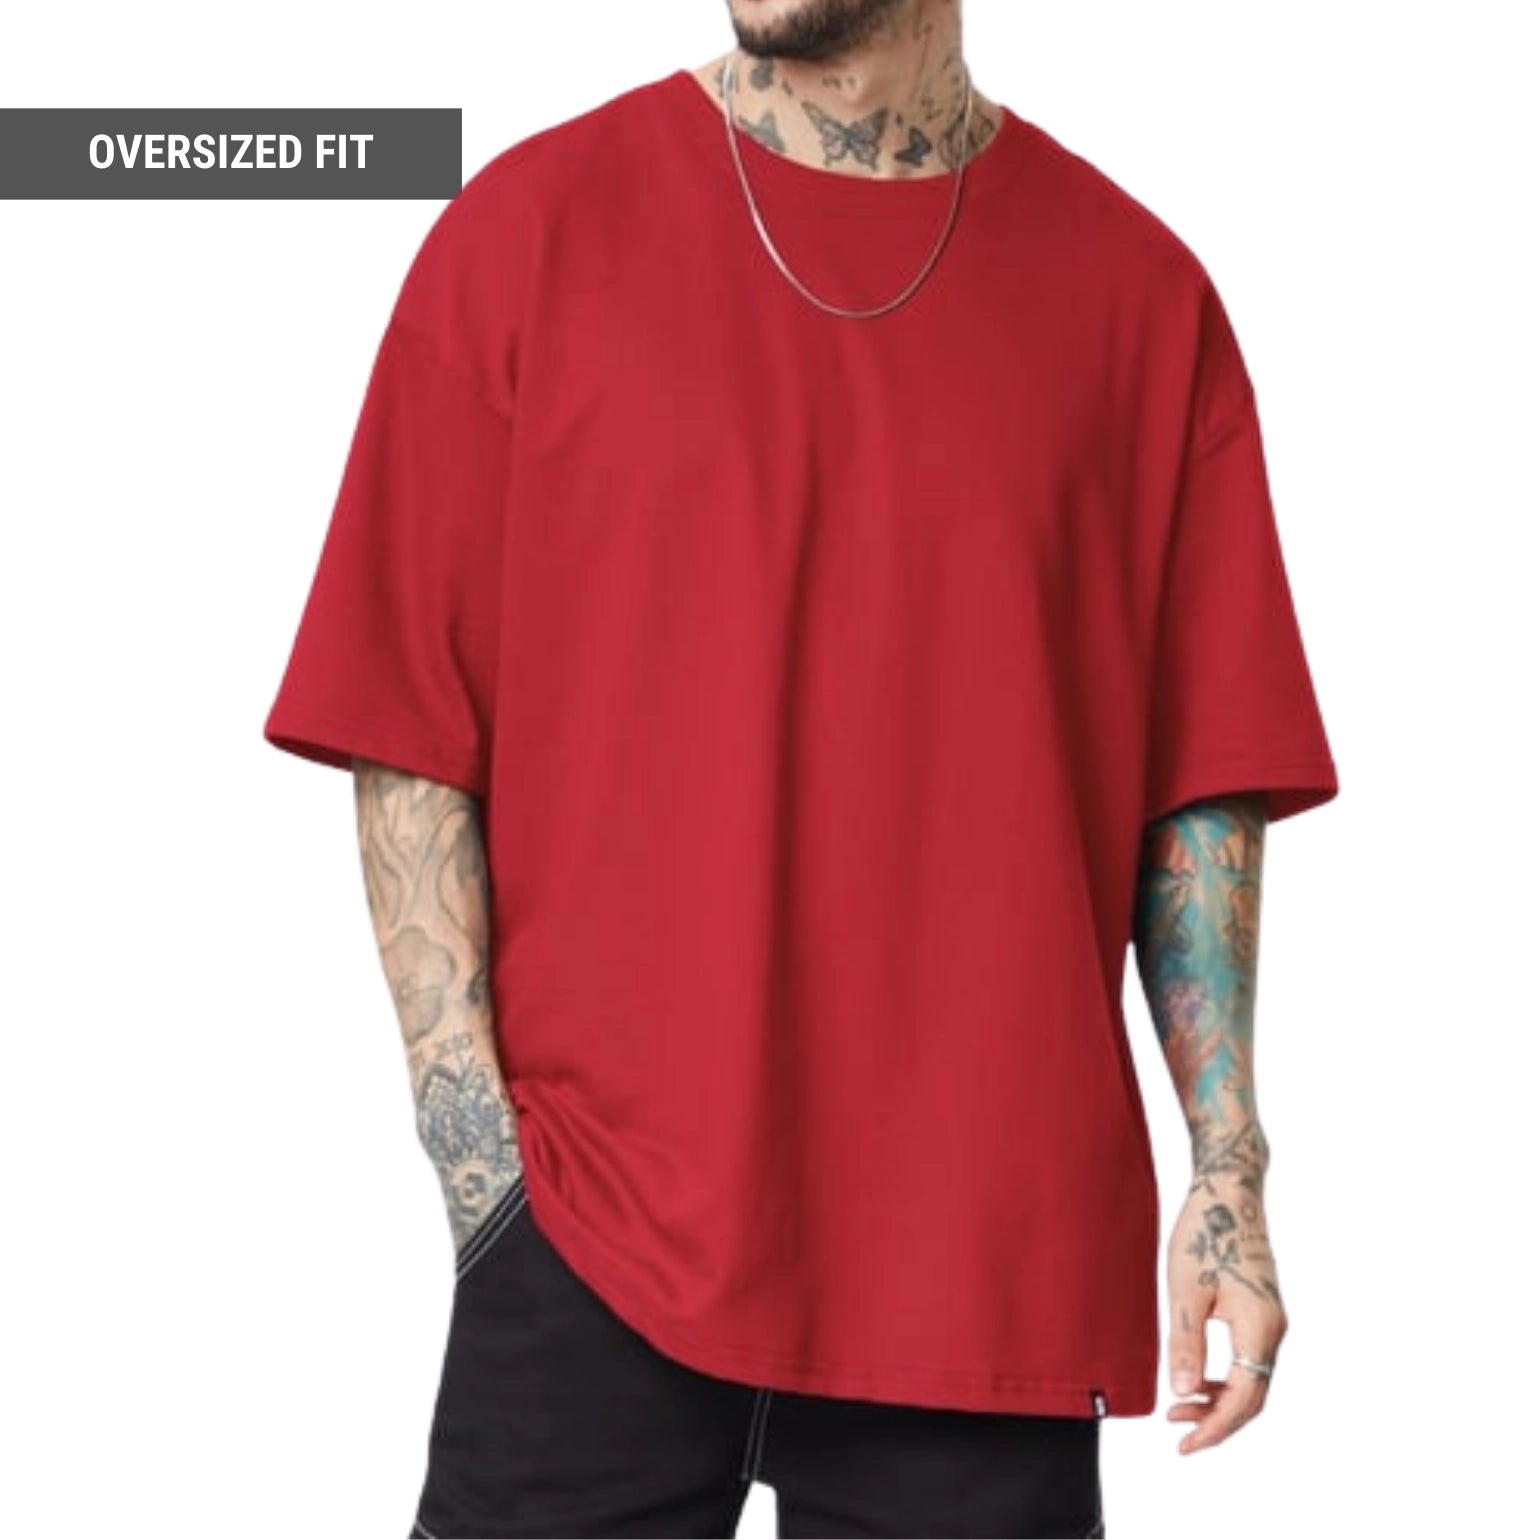 Pack of 3 Oversized T-shirt in Red, Sage Green, Beige - sleekandpeek